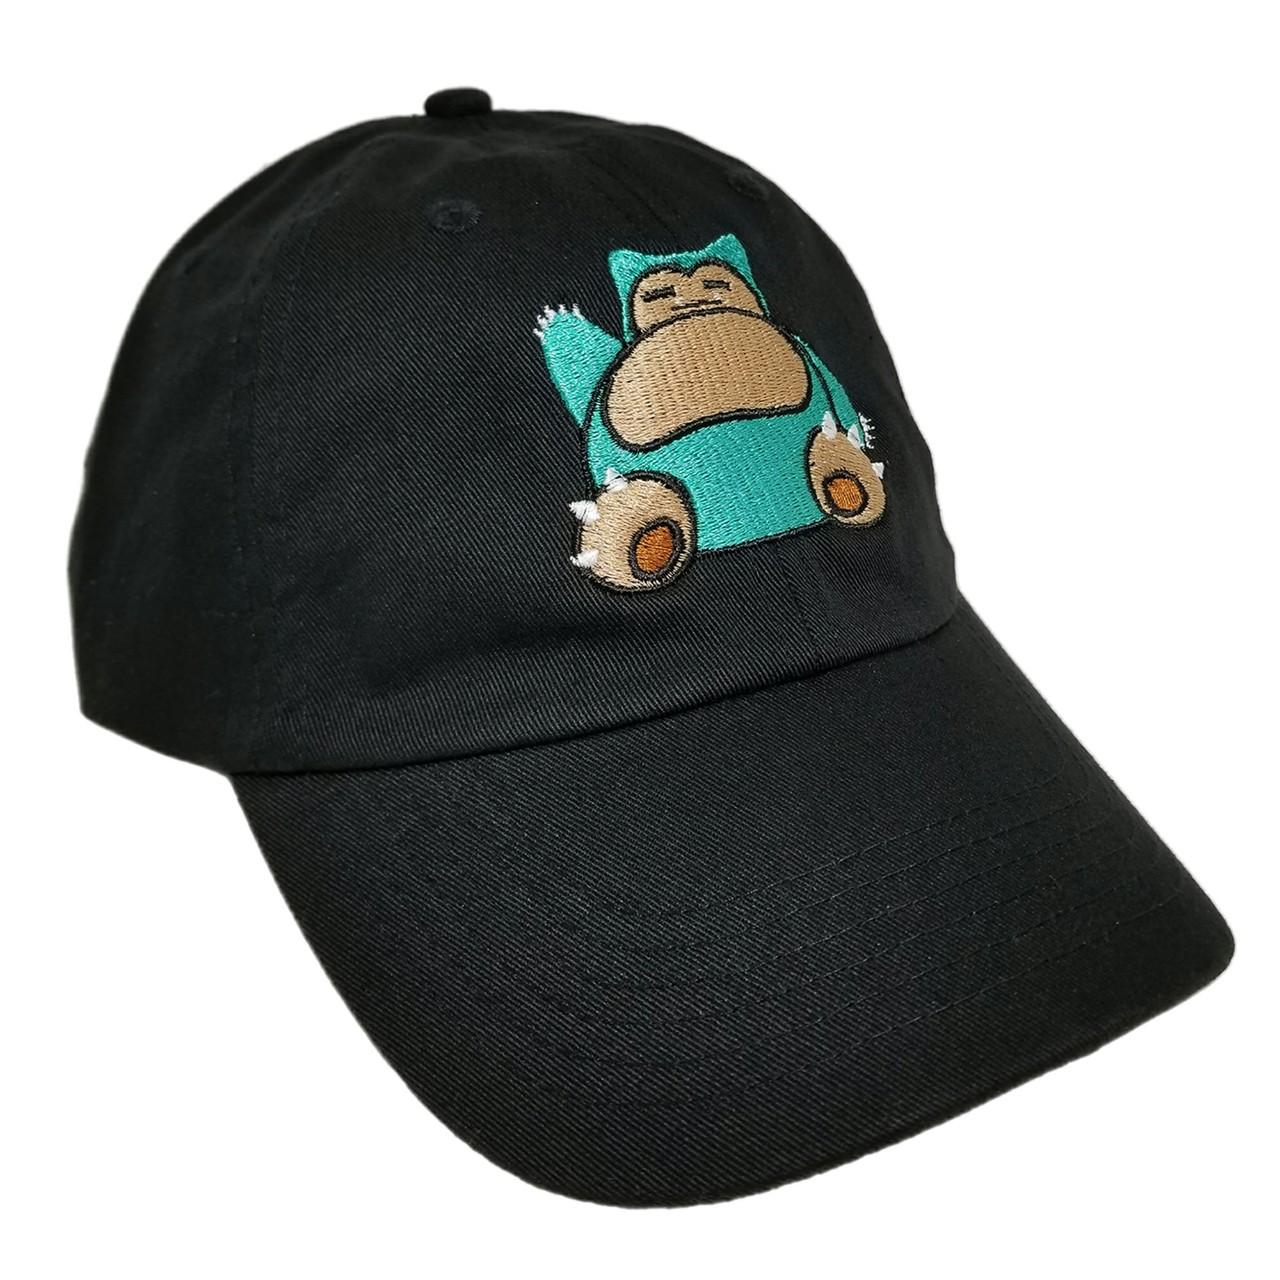 snorlax hat